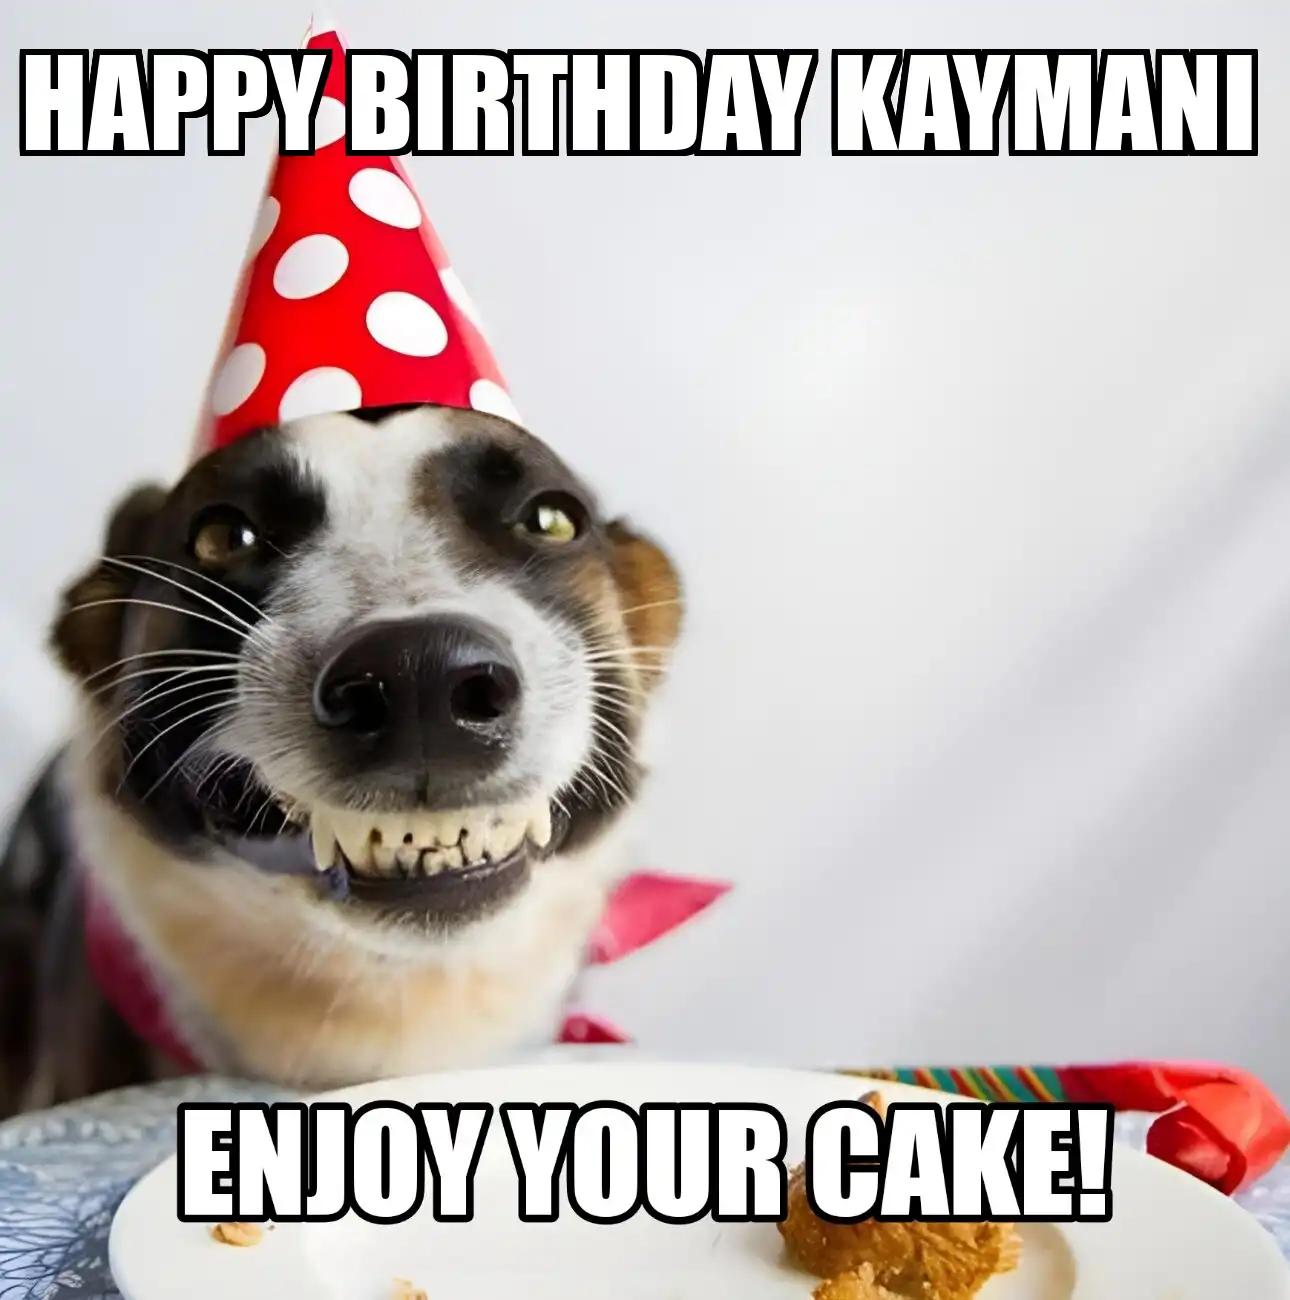 Happy Birthday Kaymani Enjoy Your Cake Dog Meme